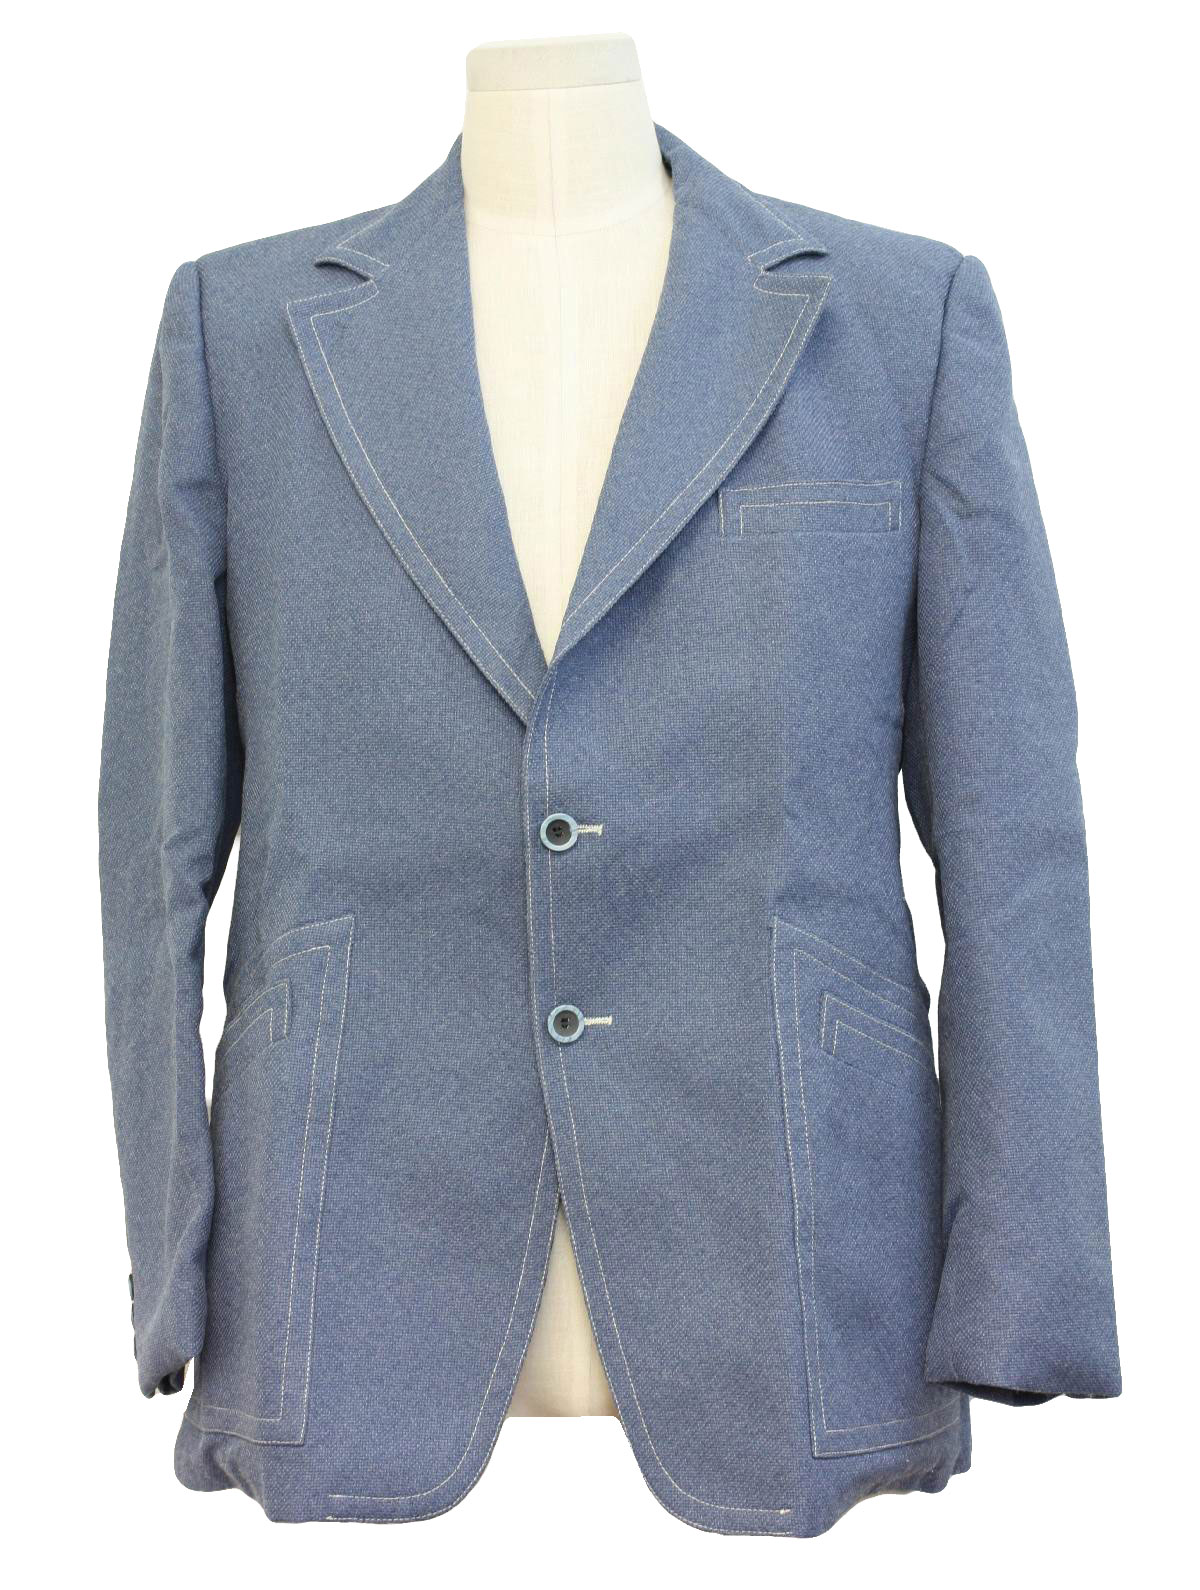 1970's Jacket (Missing Label): 70s -Missing Label- Mens heathered blue ...